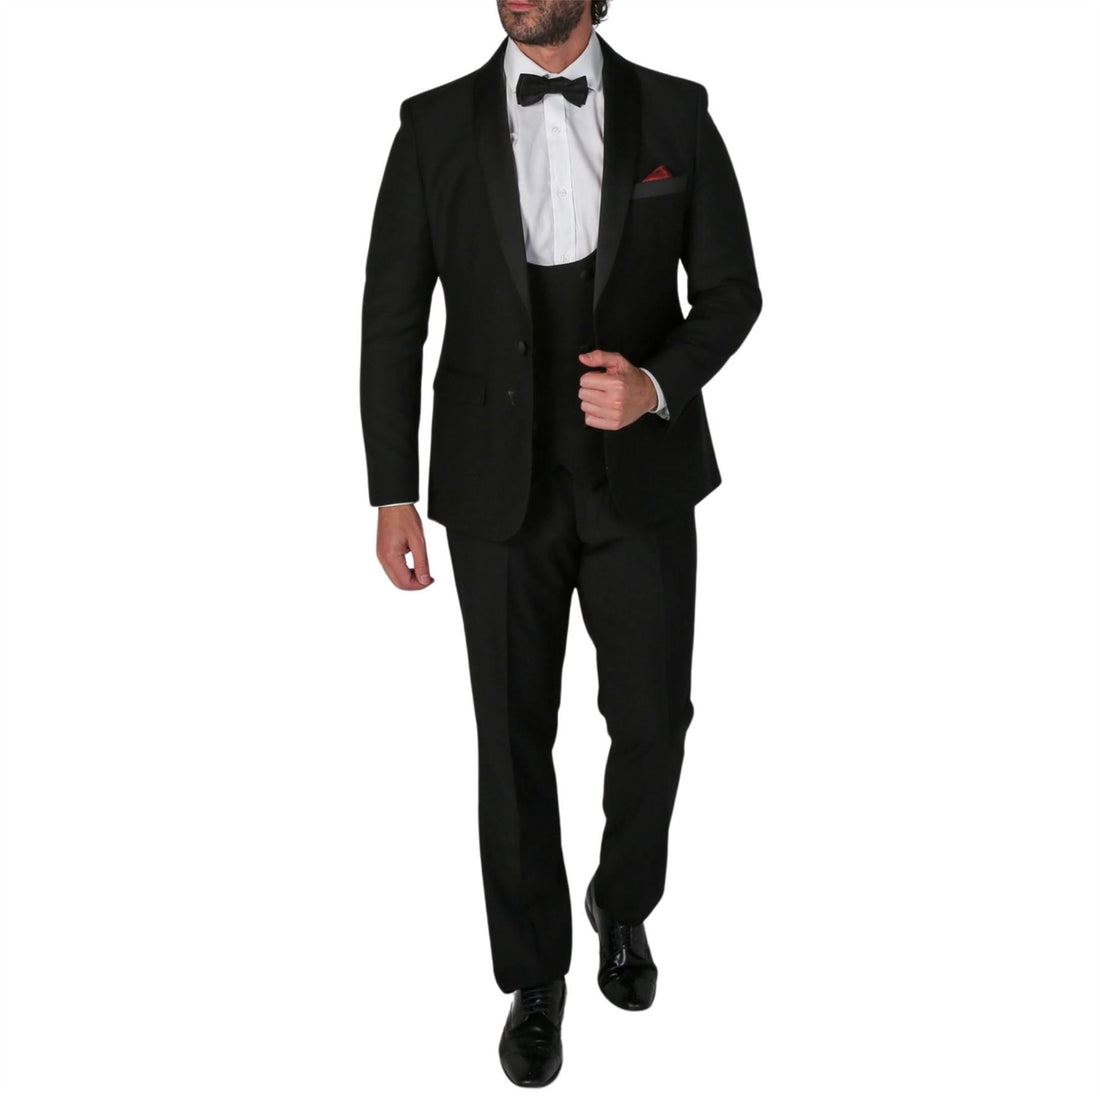 Black Tuxedo Suit - 3 Piece